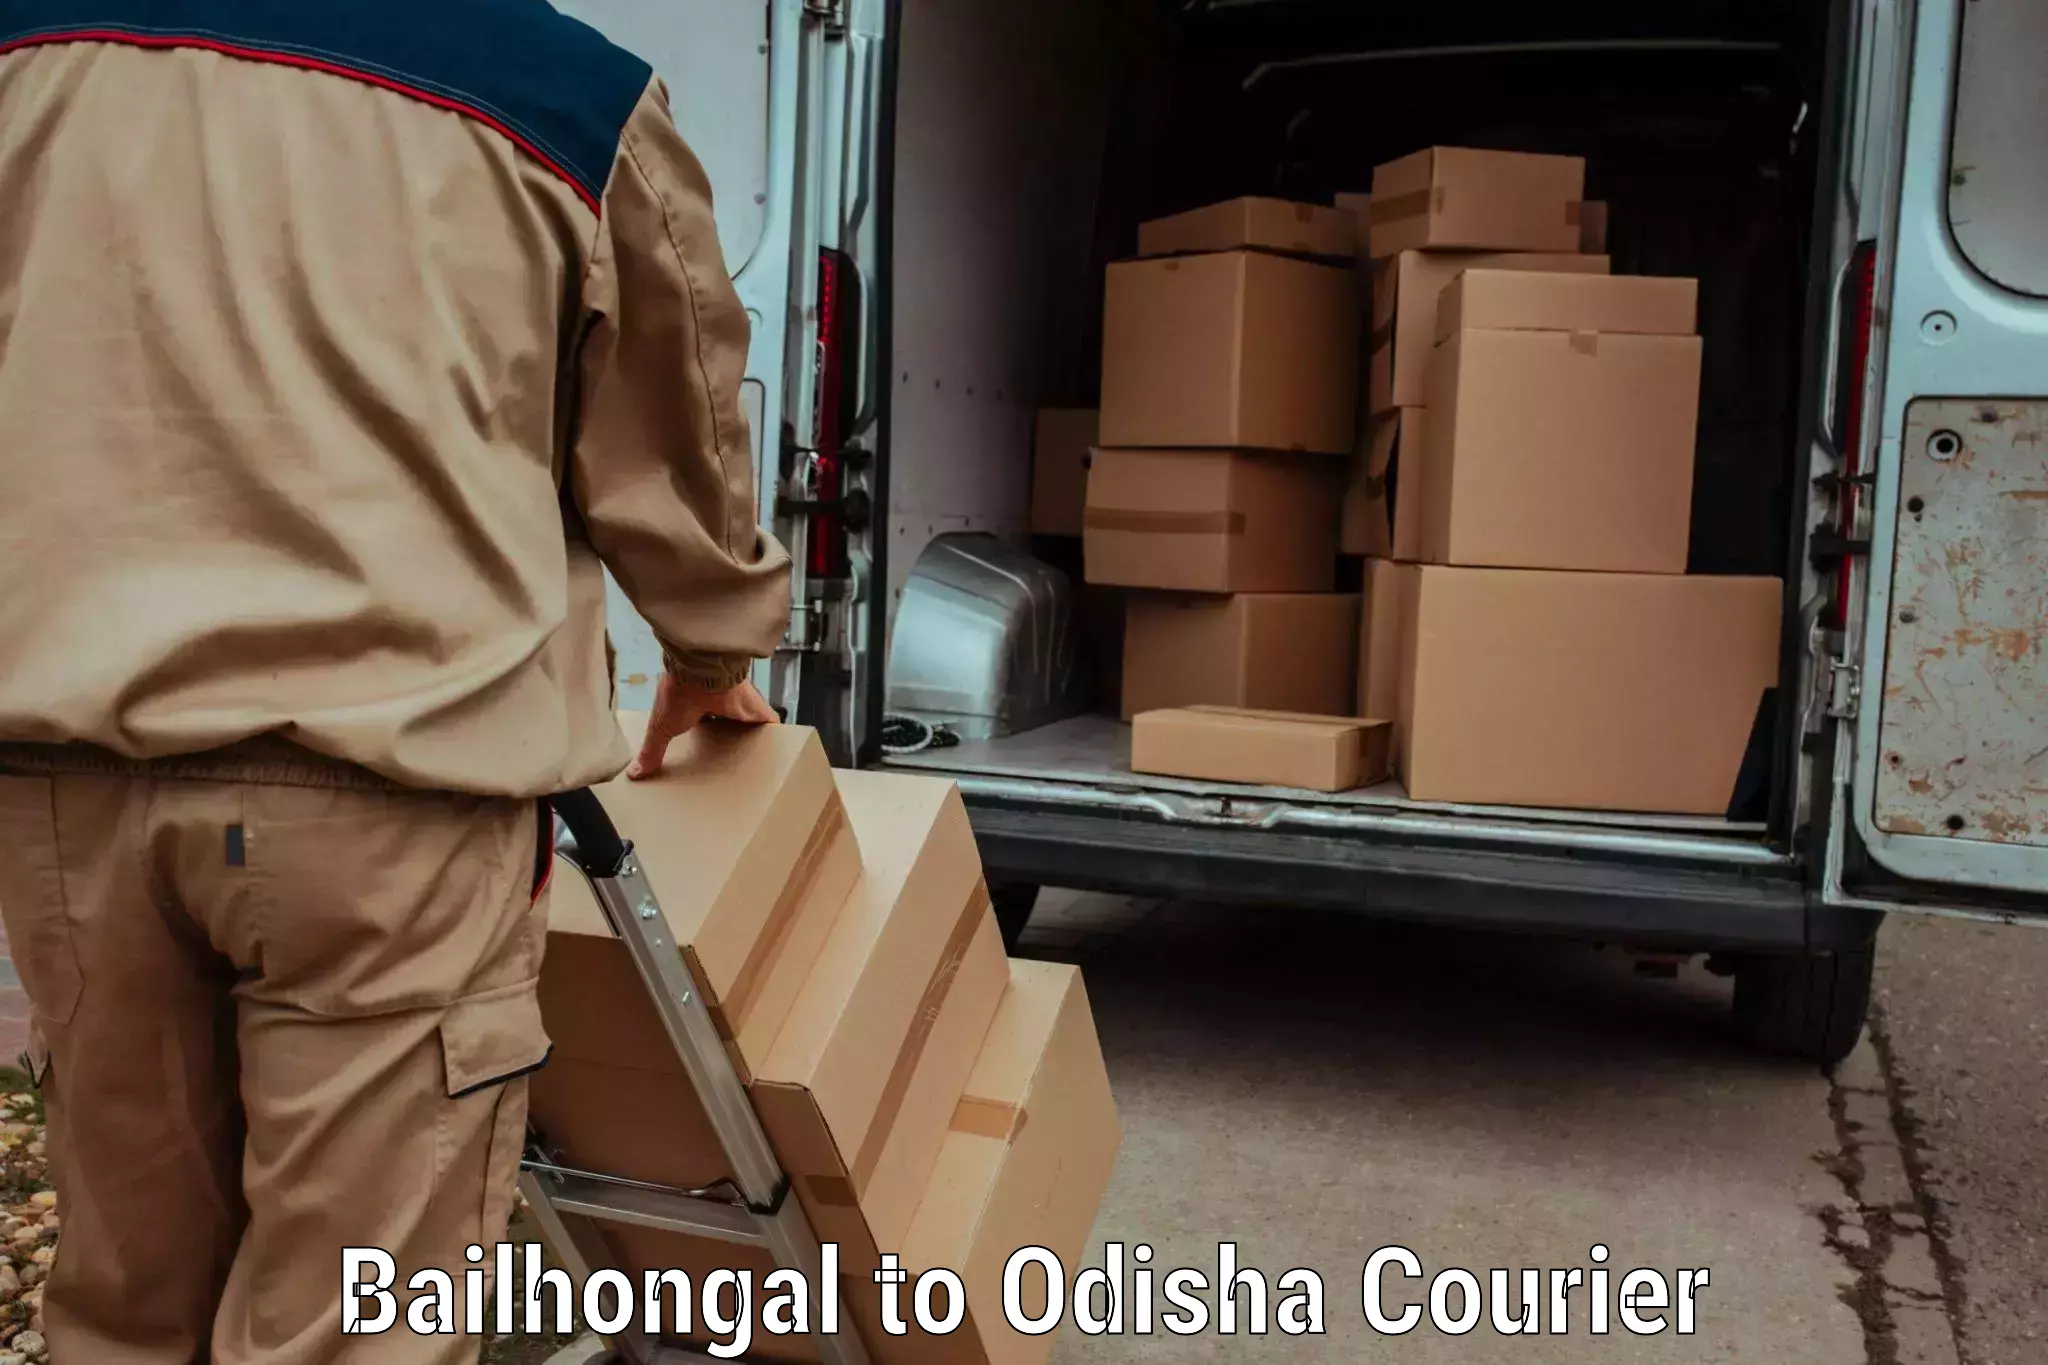 Courier membership in Bailhongal to Odisha